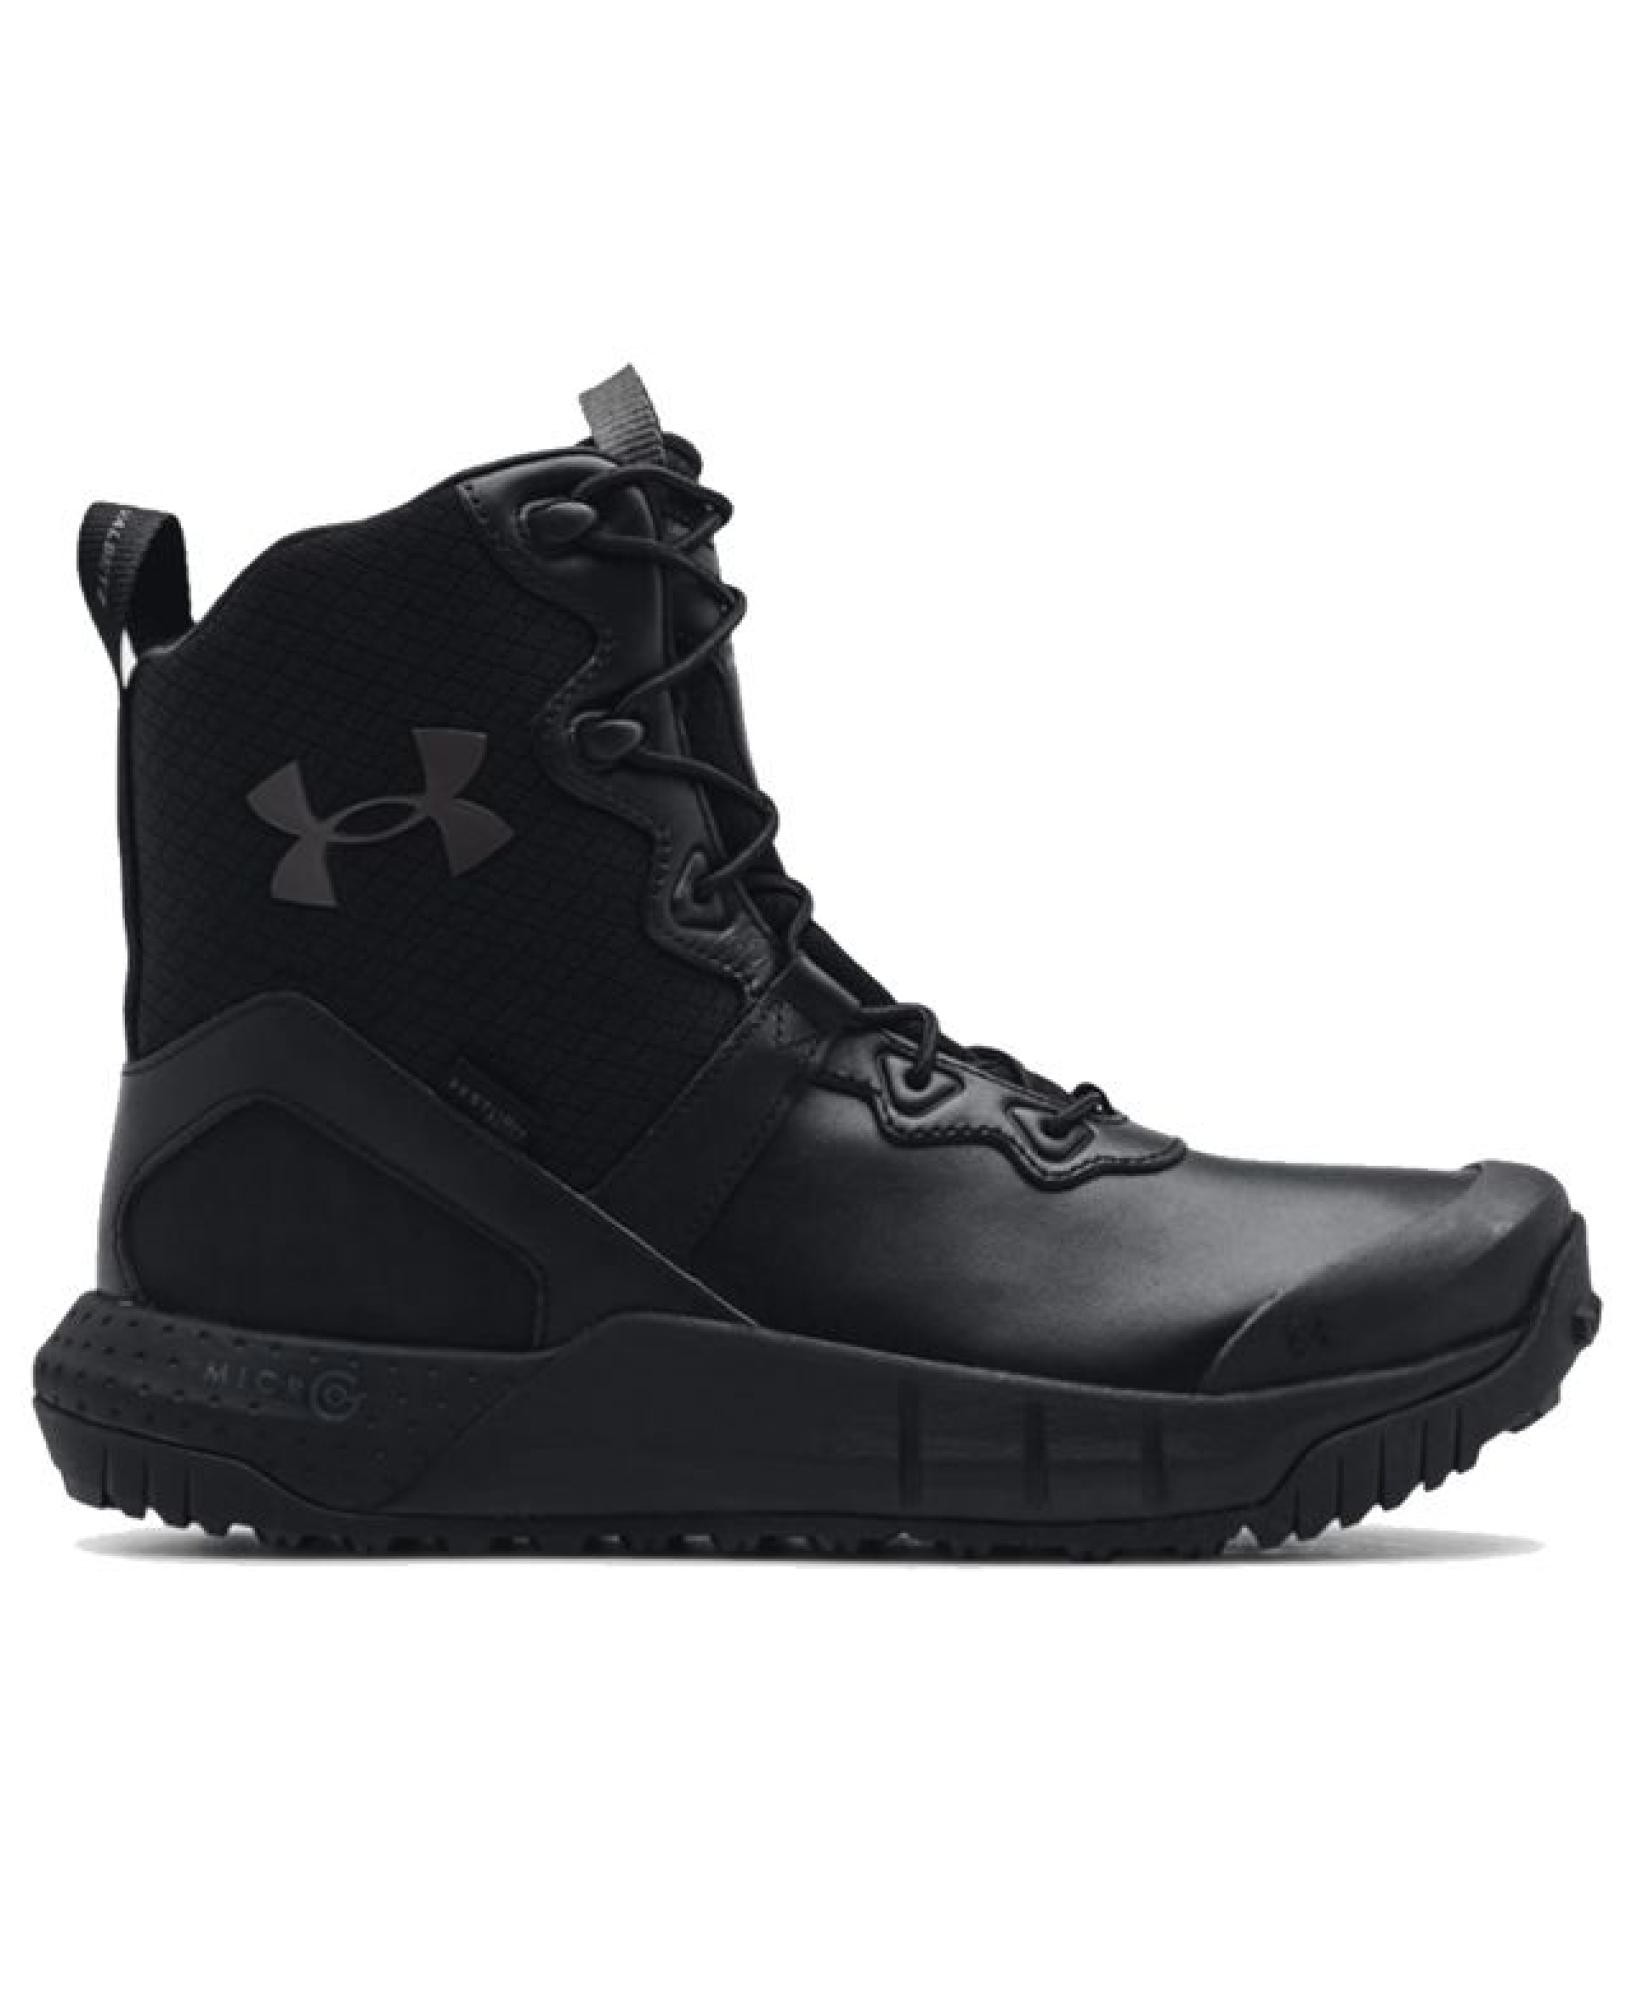 Under Armour MG Valsetz Mid LTHR WP Military Shoes Black